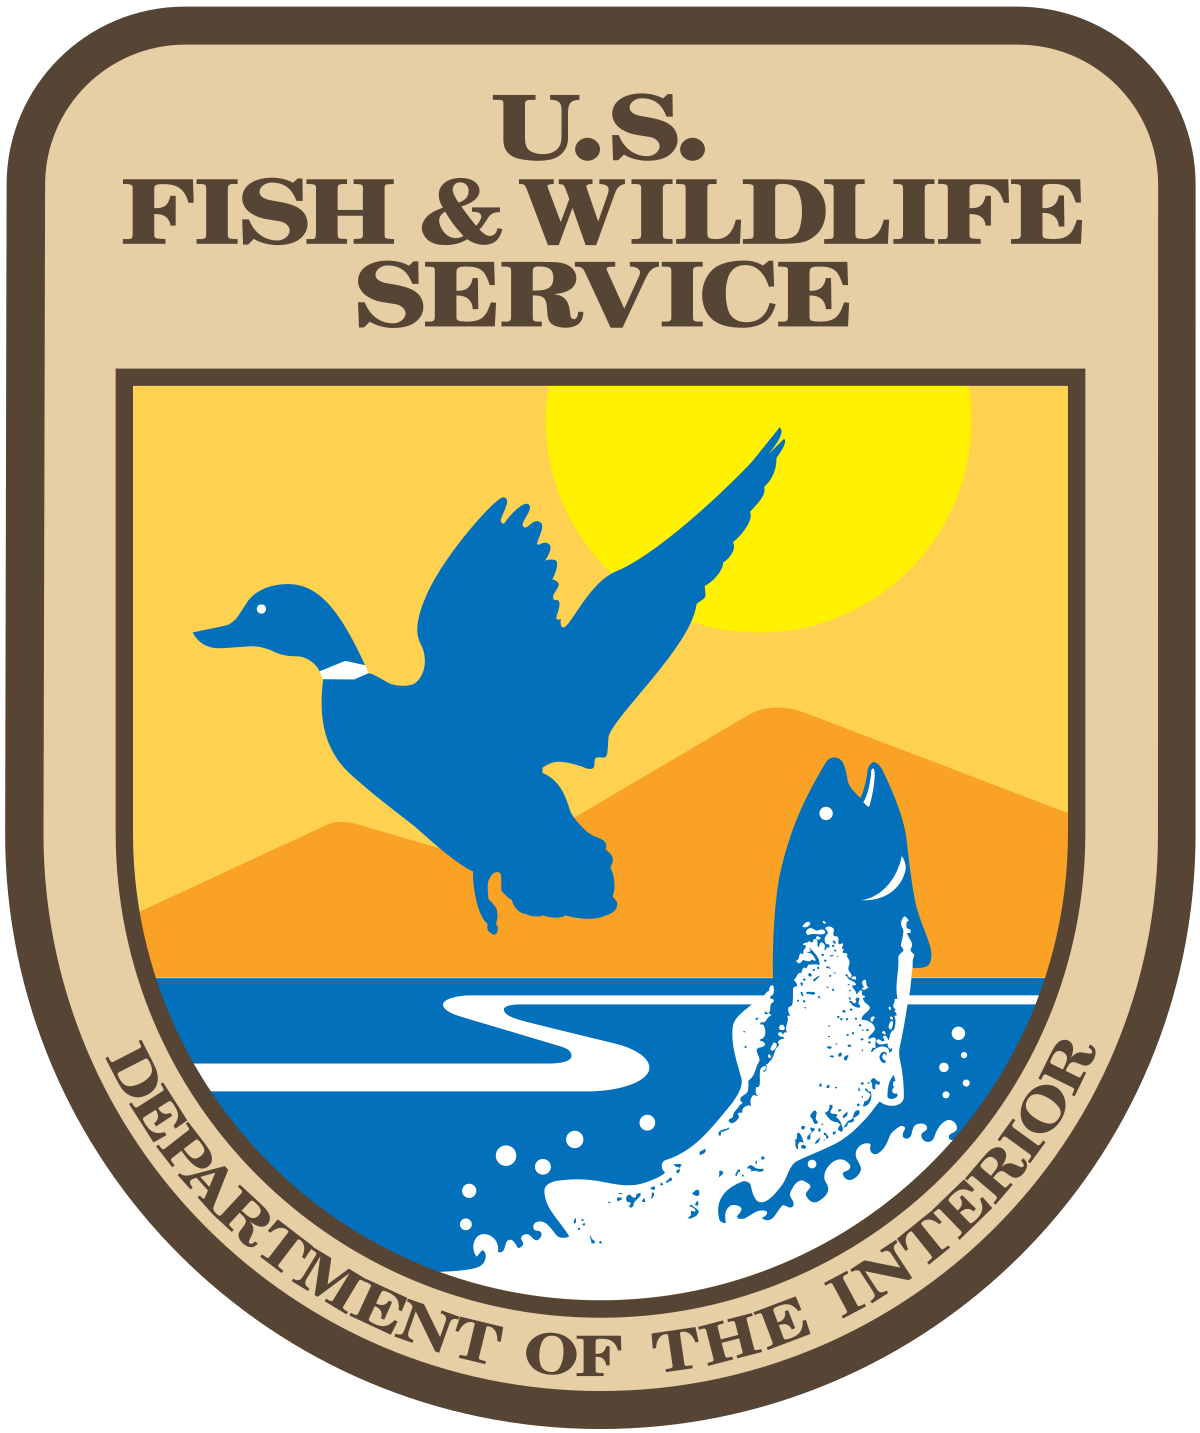 U.S. Fish &#038; Wildlife Service logo